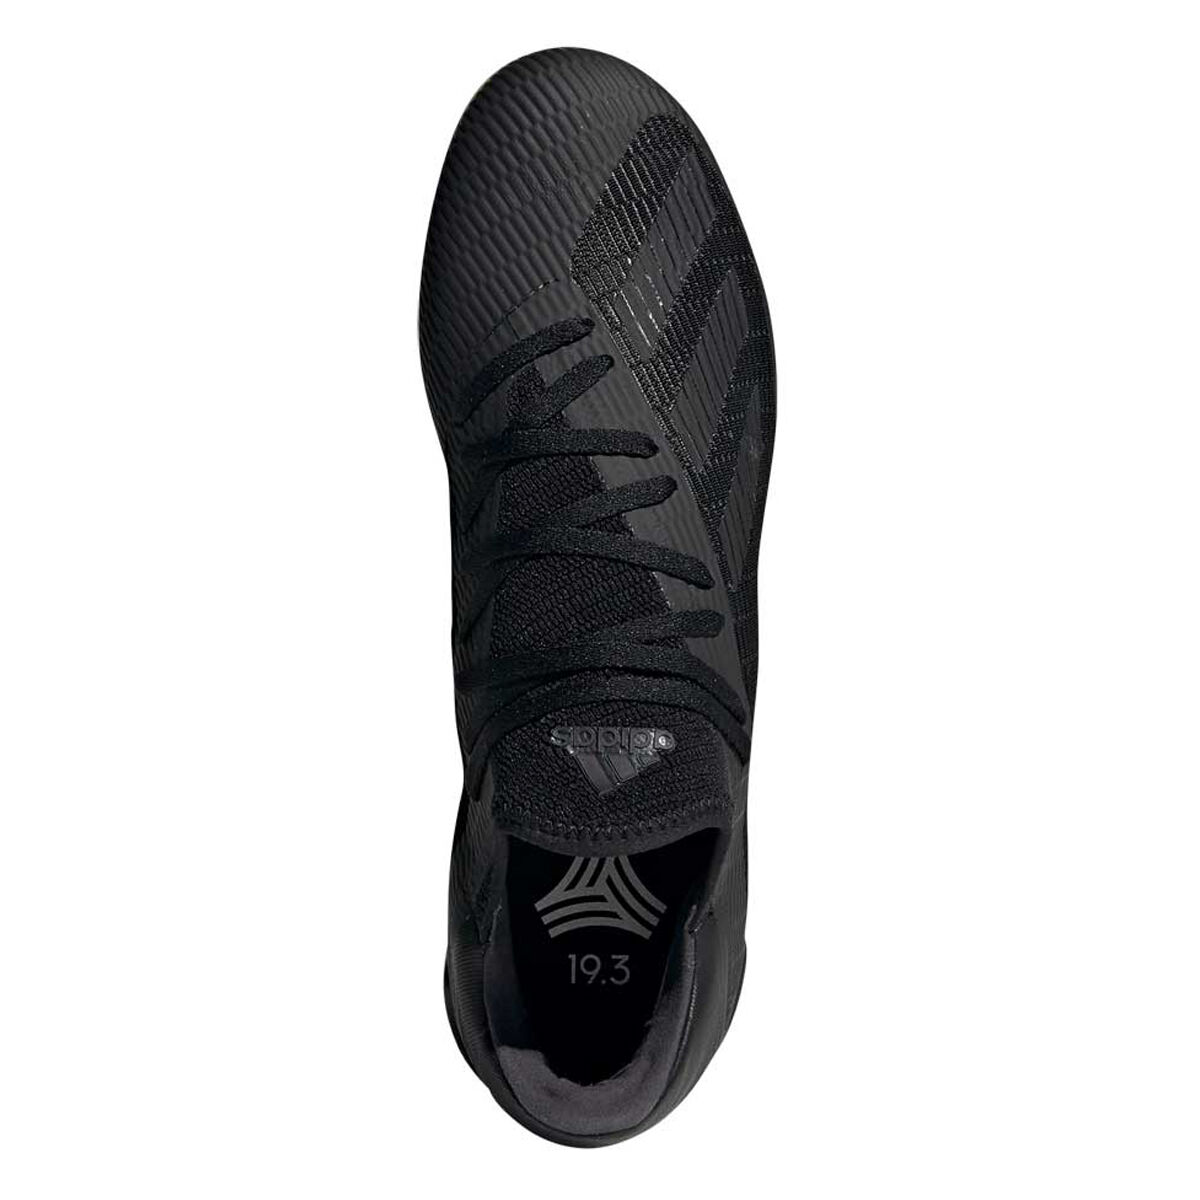 adidas X 19.3 Indoor Soccer Shoes Black 